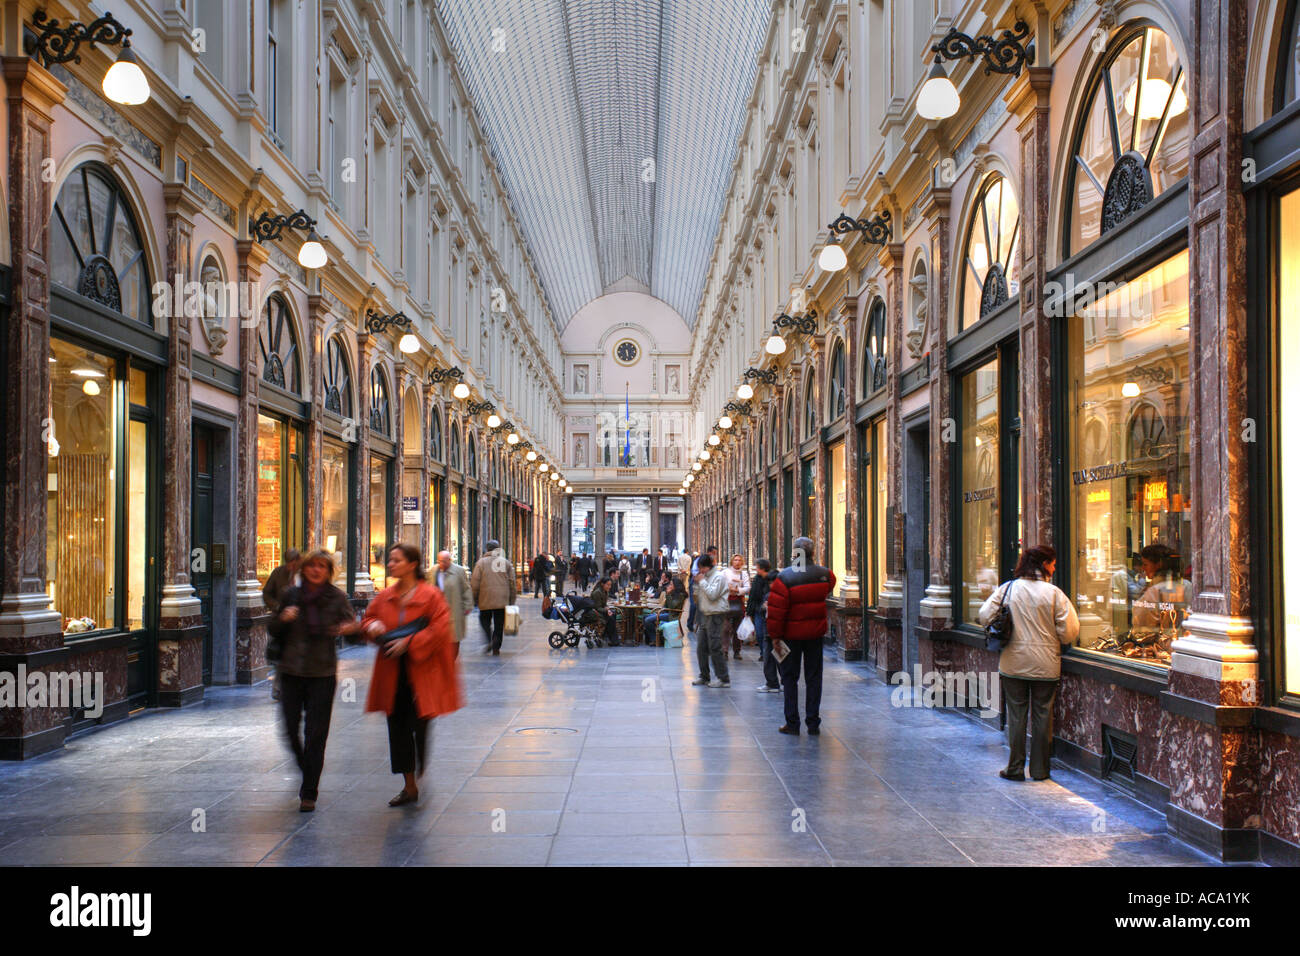 Shopping mall Galeries Royales Saint-Hubert, Brussels, Belgium Stock Photo  - Alamy